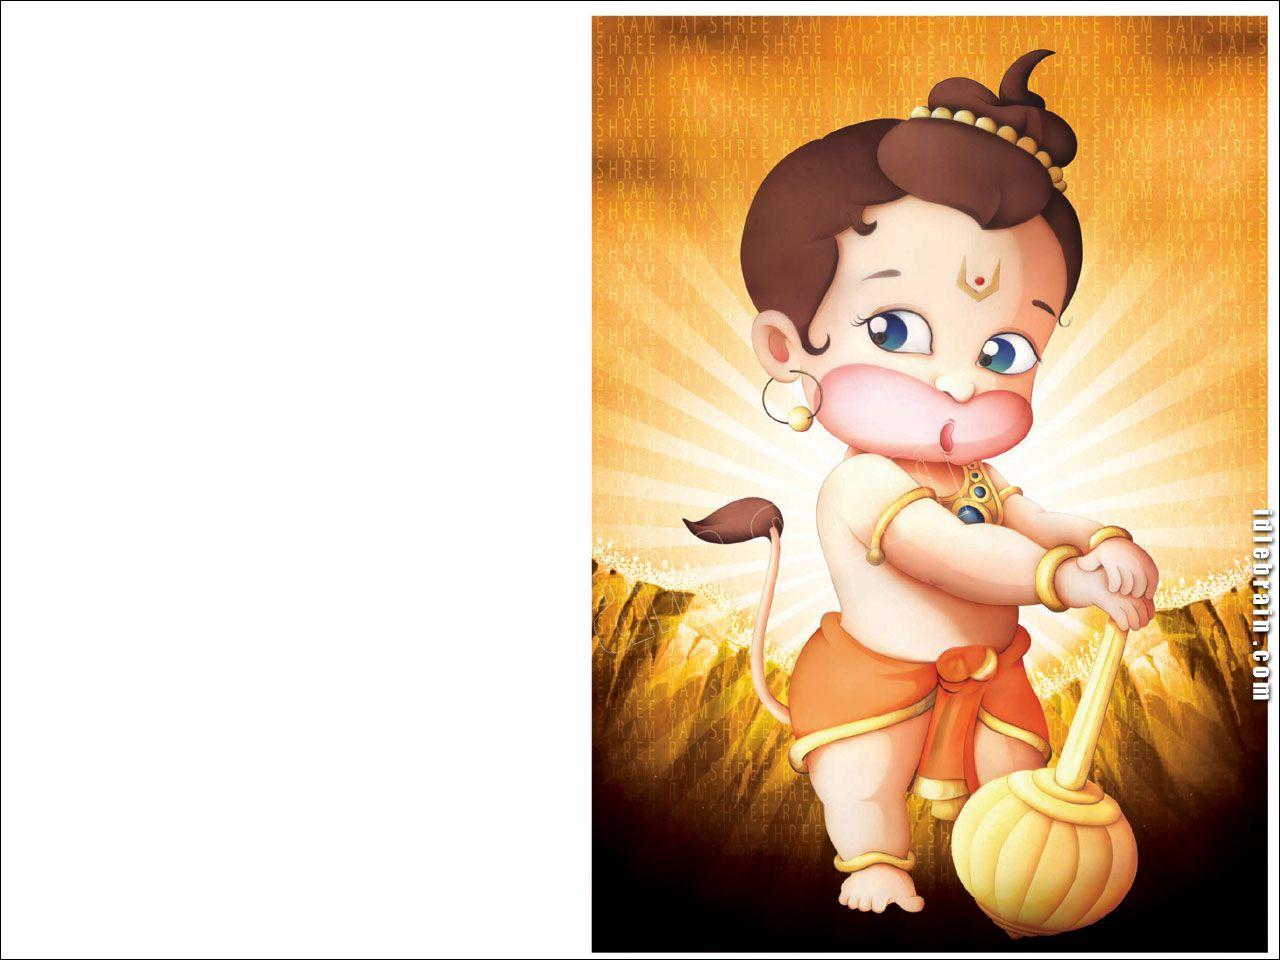 Hanuman Receives Lord Shiva's Blessings Poster by Vishnudas Art - Pixels